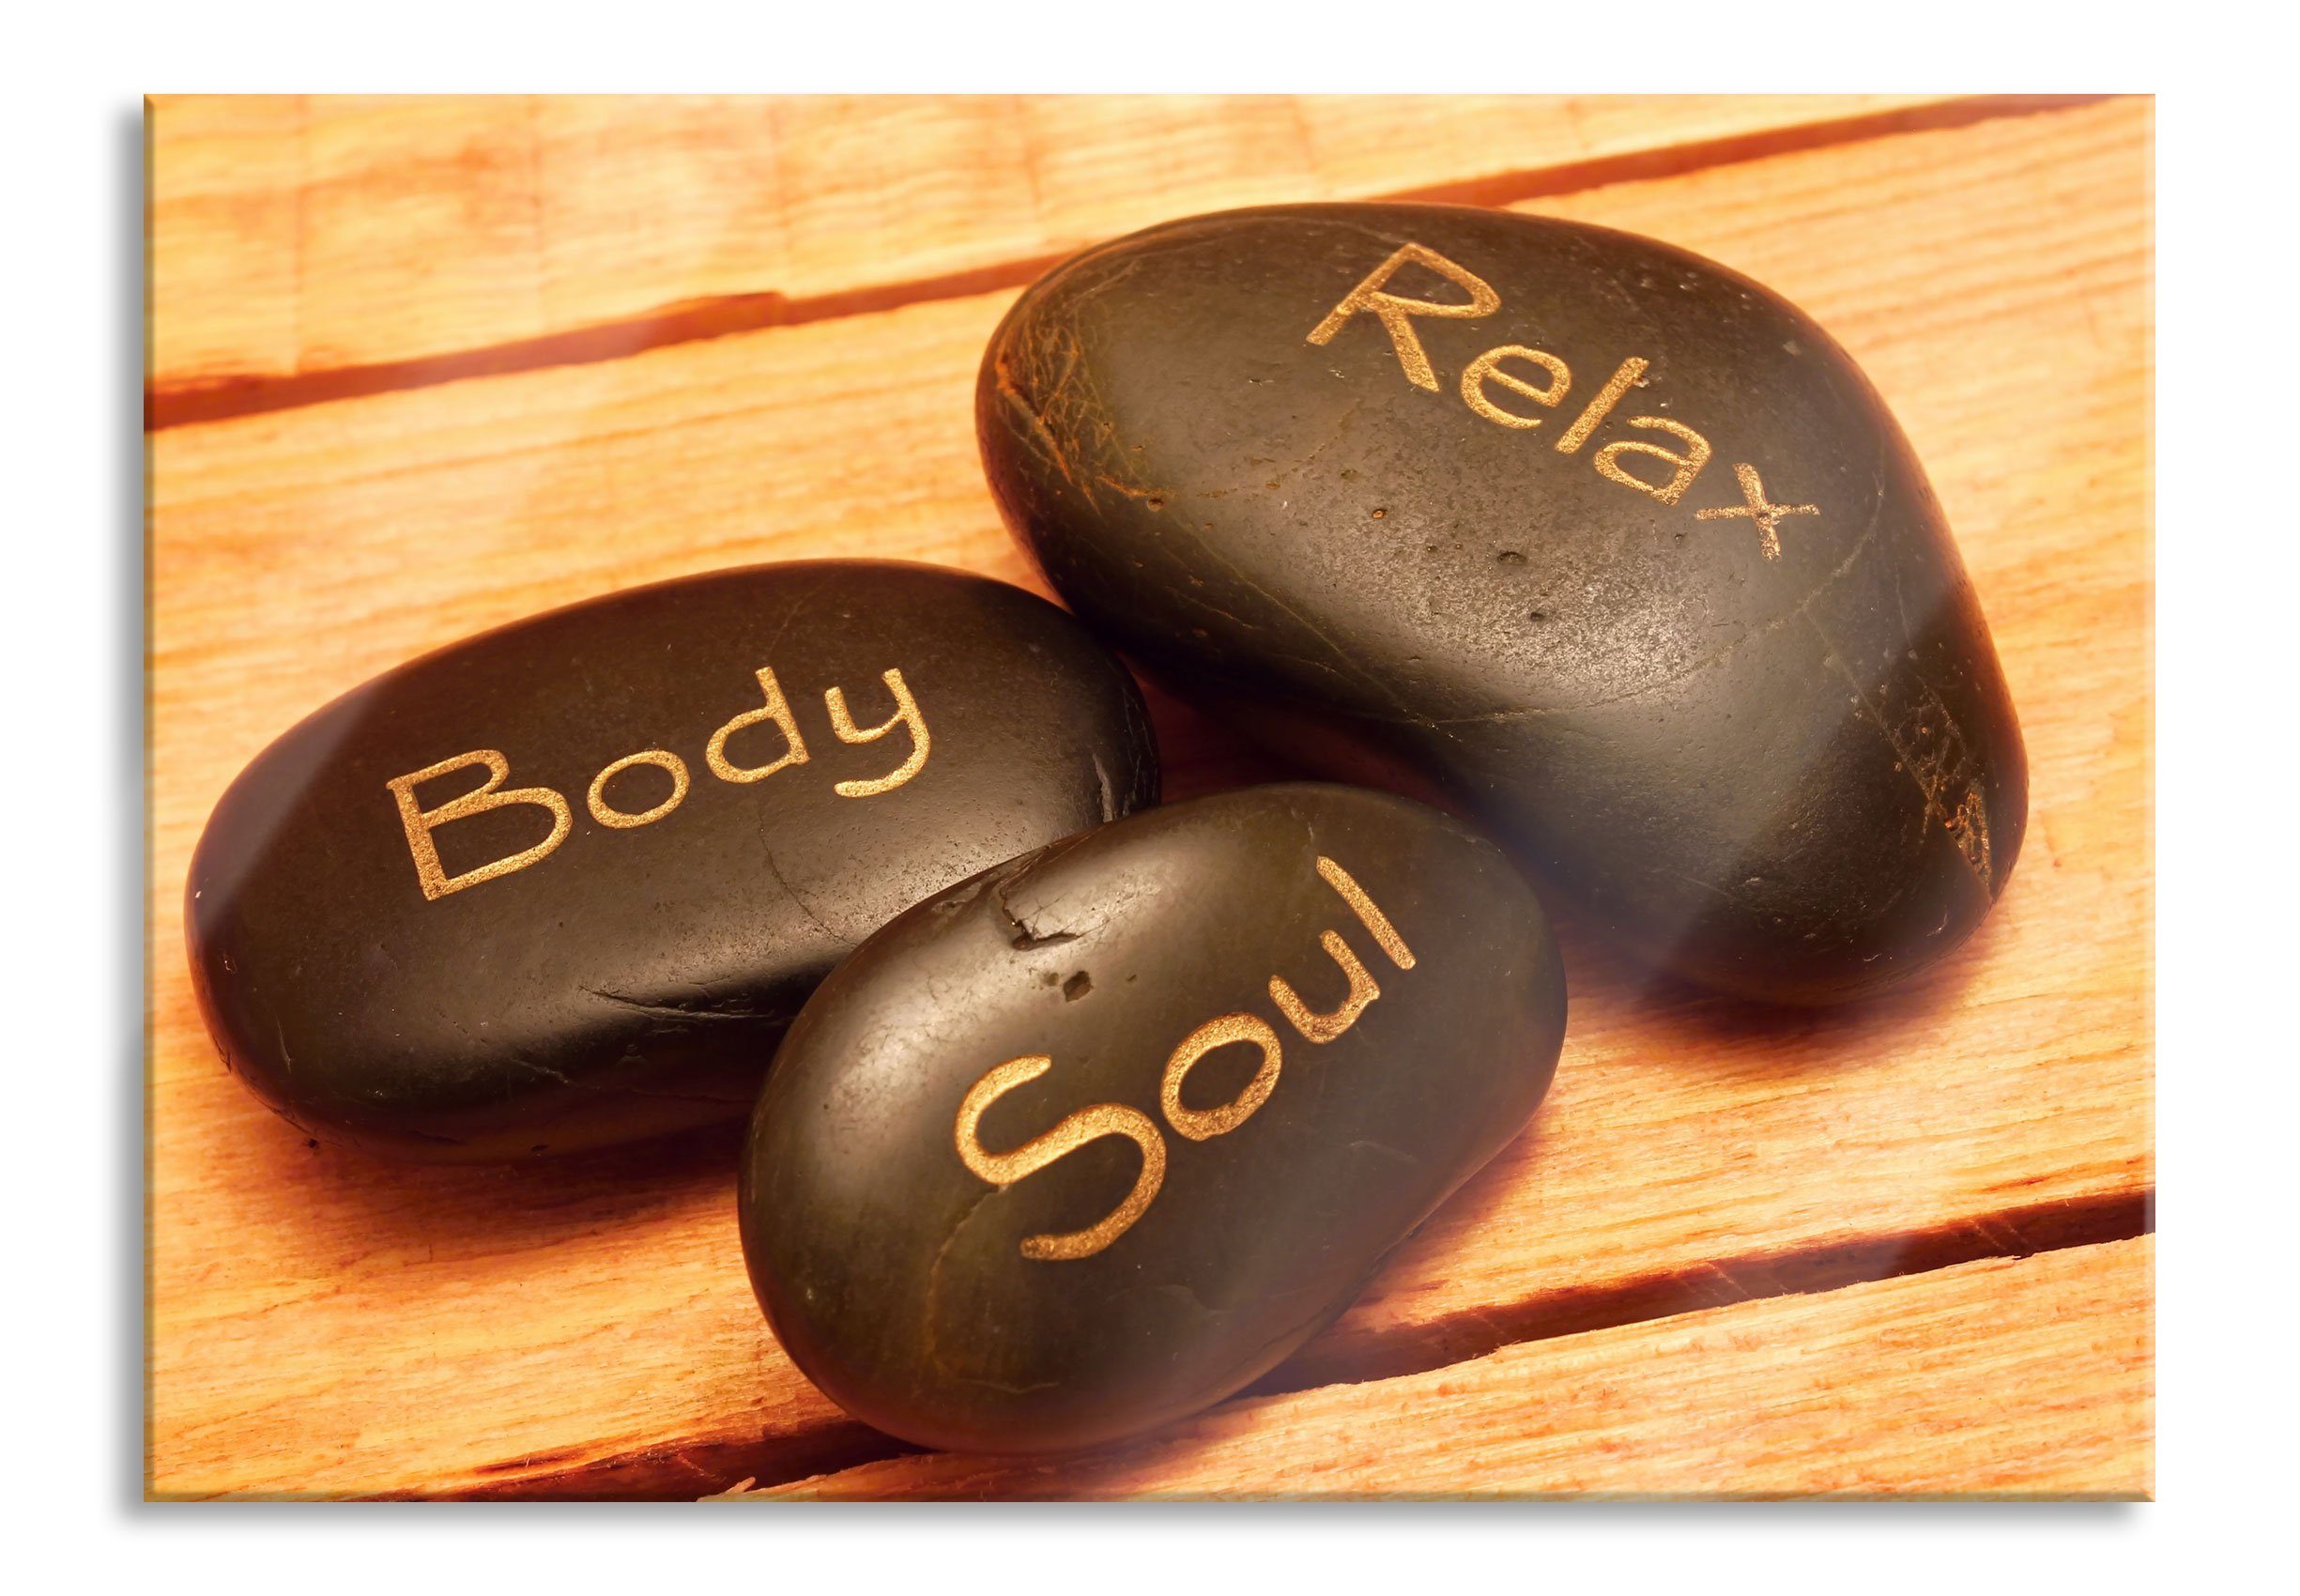 St), Body Wellness Abstandshalter Relax, Glasbild Soul Glasbild Soul und (1 Echtglas, Aufhängungen aus Pixxprint inkl. Relax Body Wellness